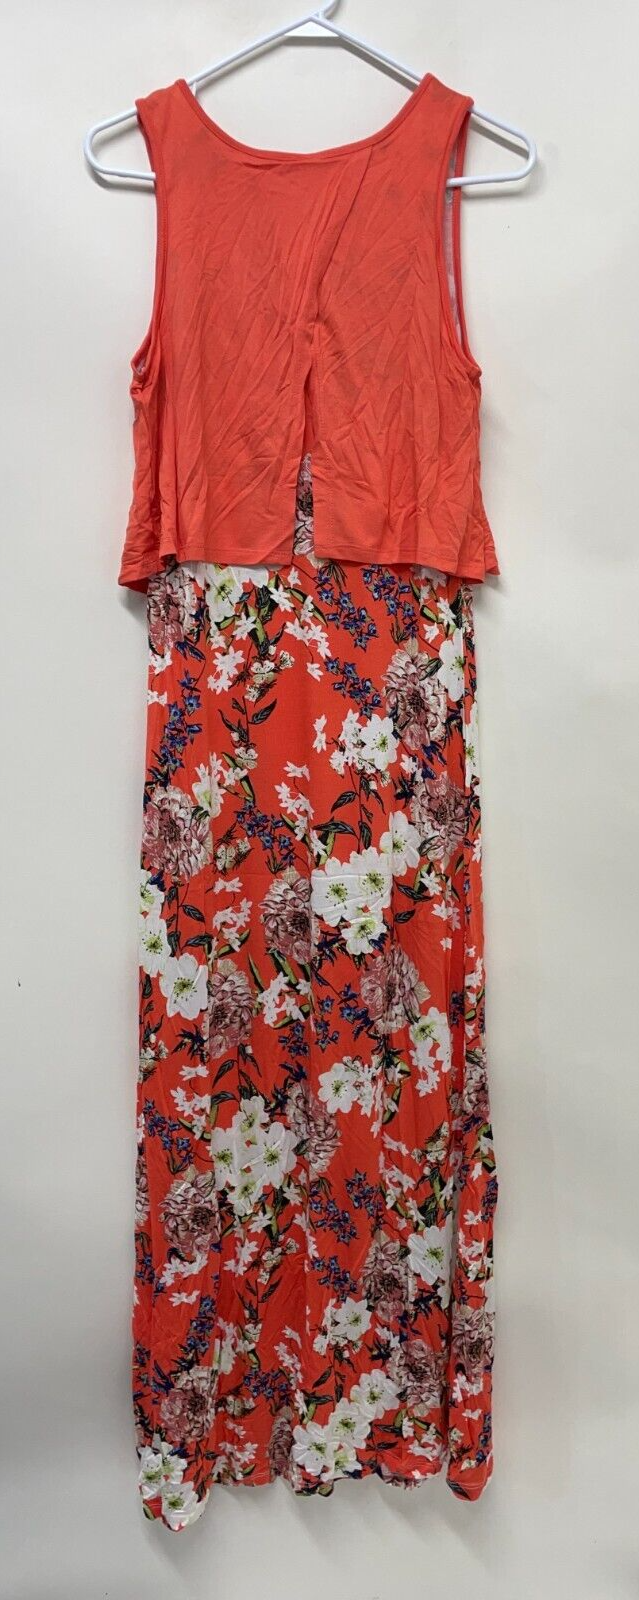 Lascana Womens 8 Layered Look Maxi Dress Coral Orange Floral Pattern X30032-8